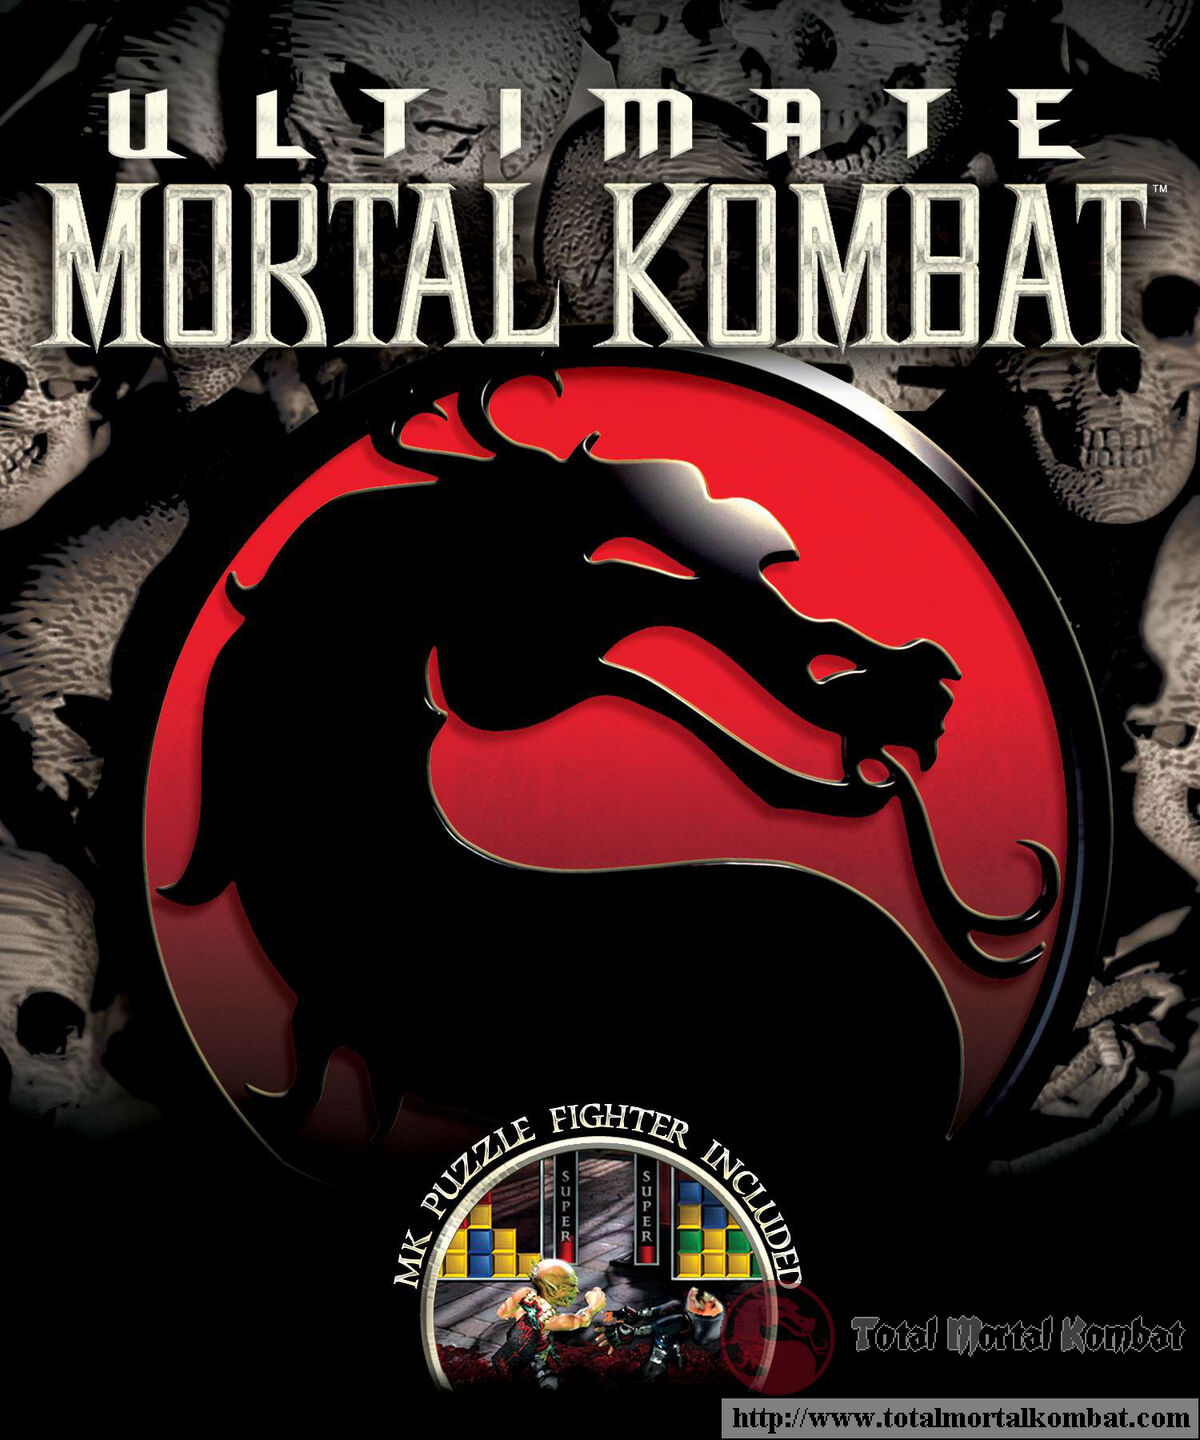 Sub Zero, mortal Kombat 4, Ultimate Mortal Kombat 3, mortal Kombat